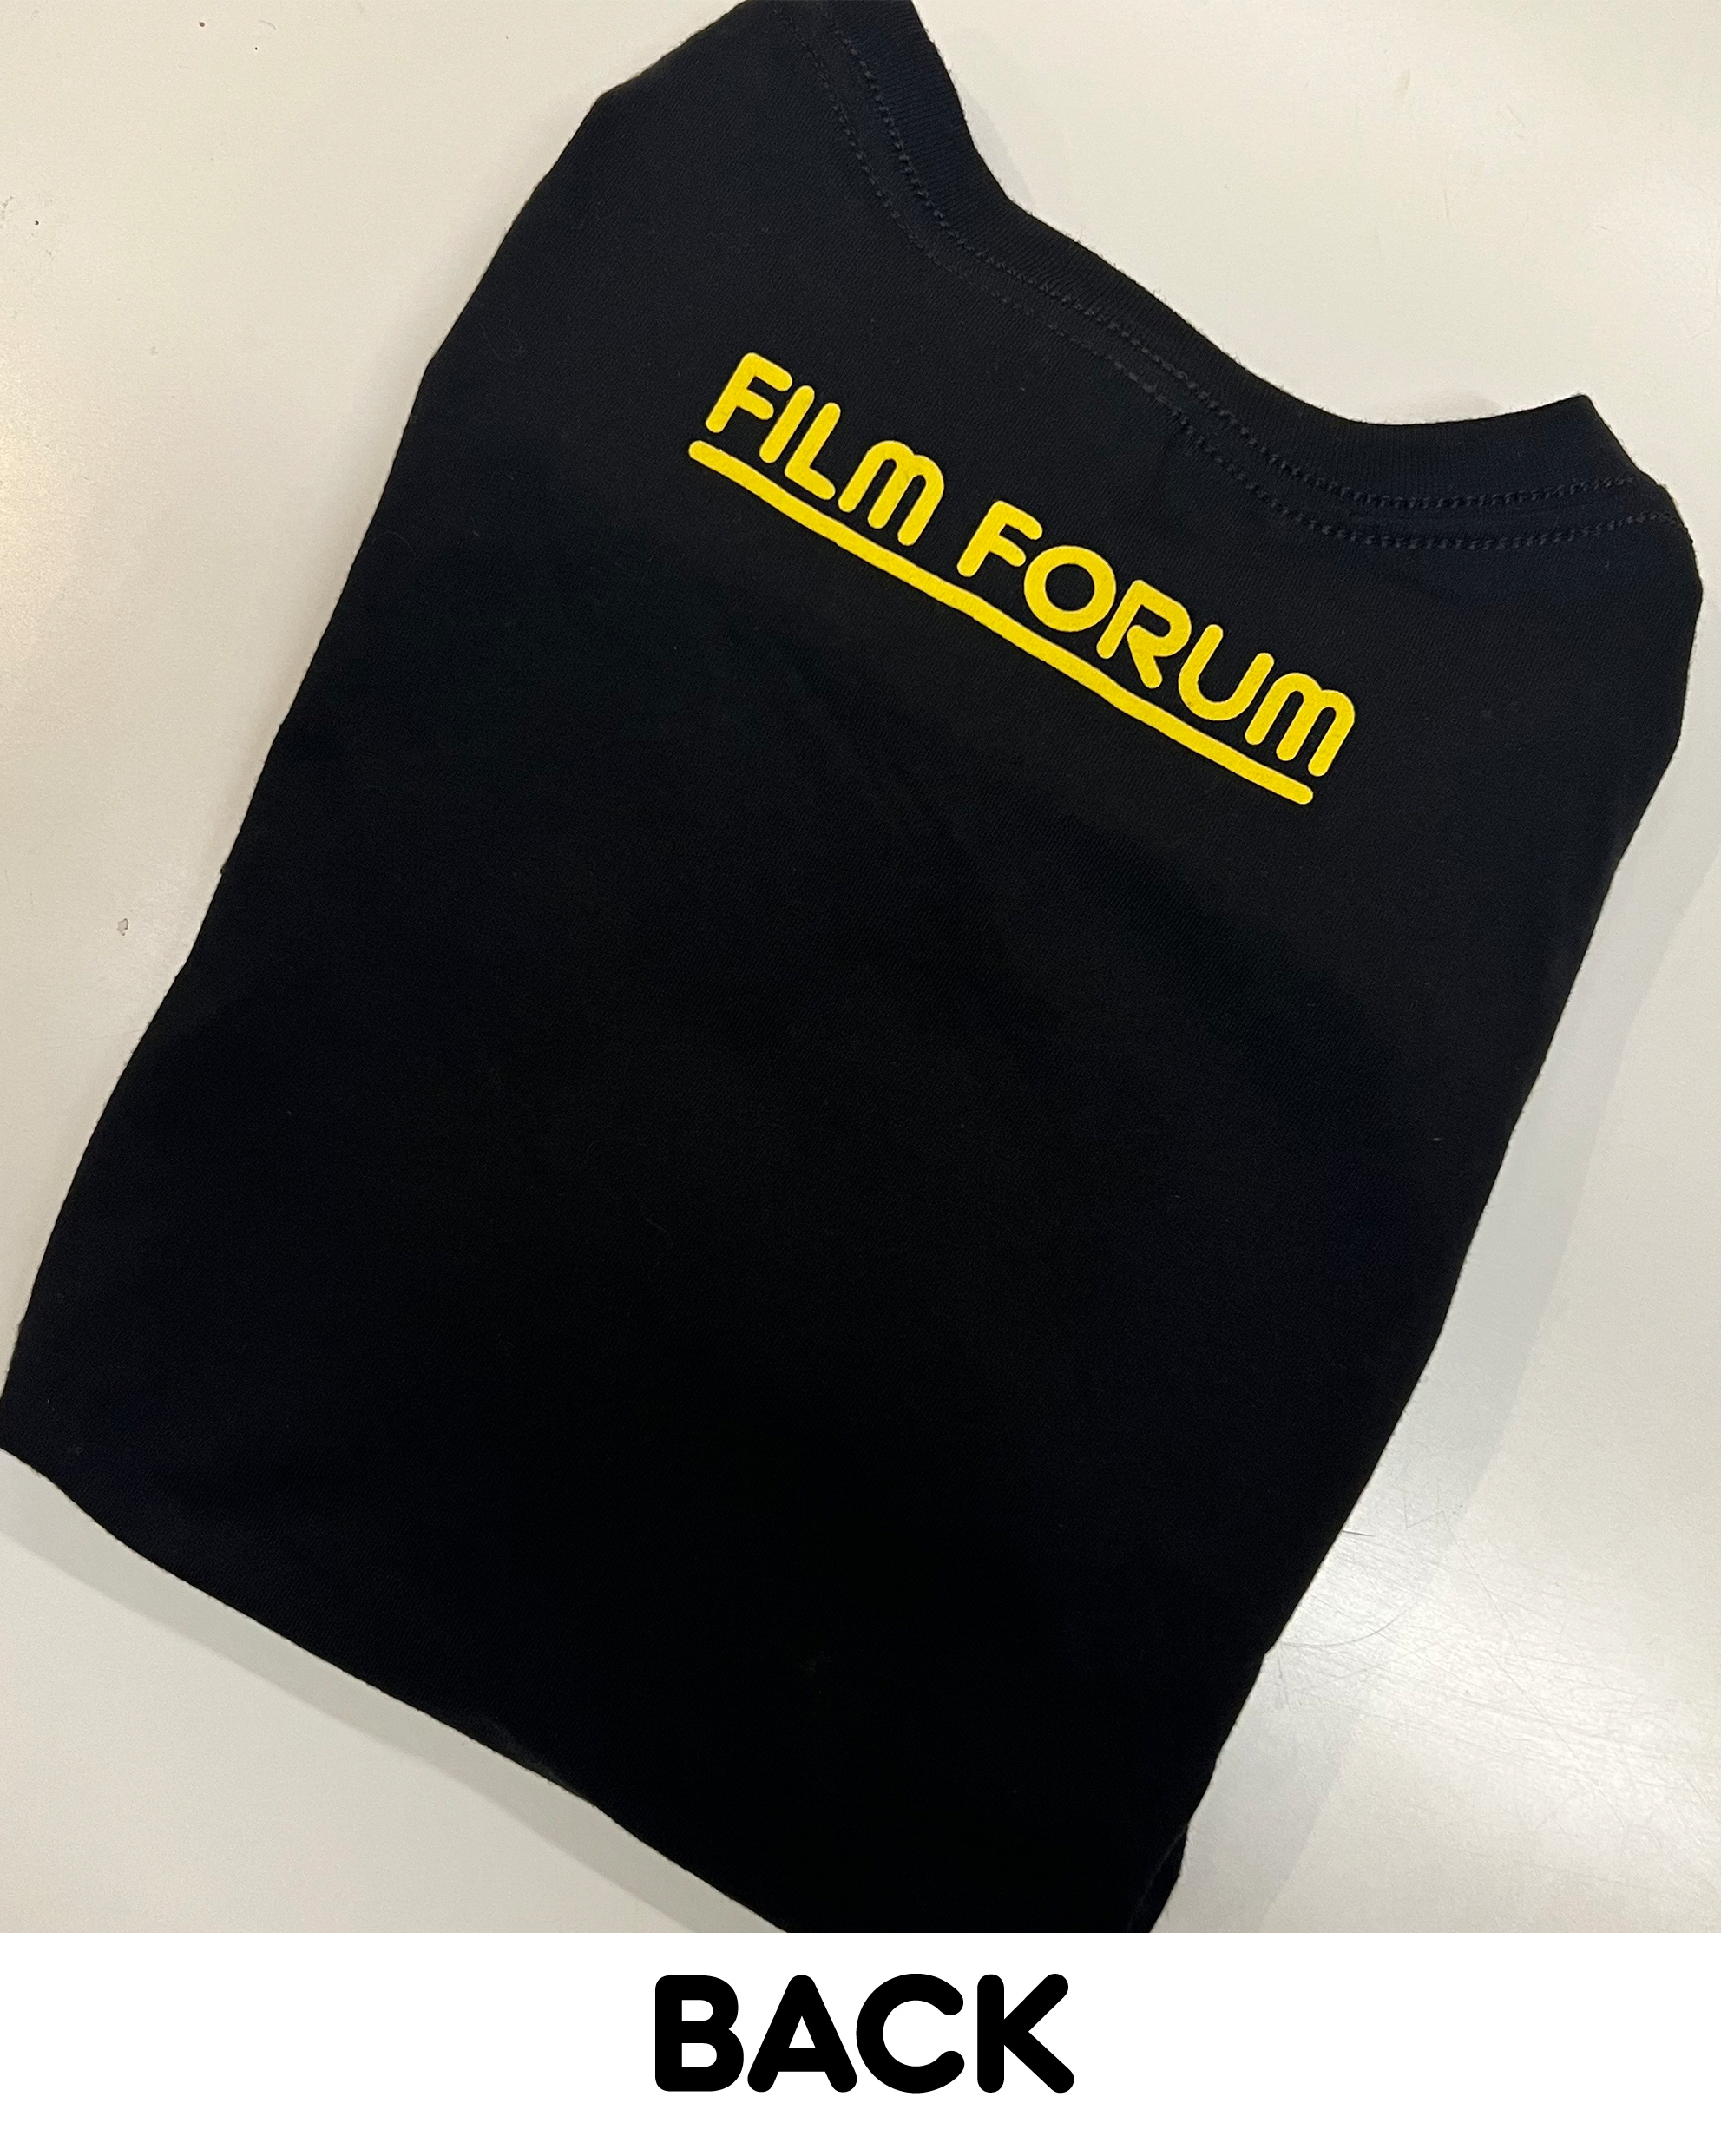 Greetings from Film Forum - Back of Tshirt